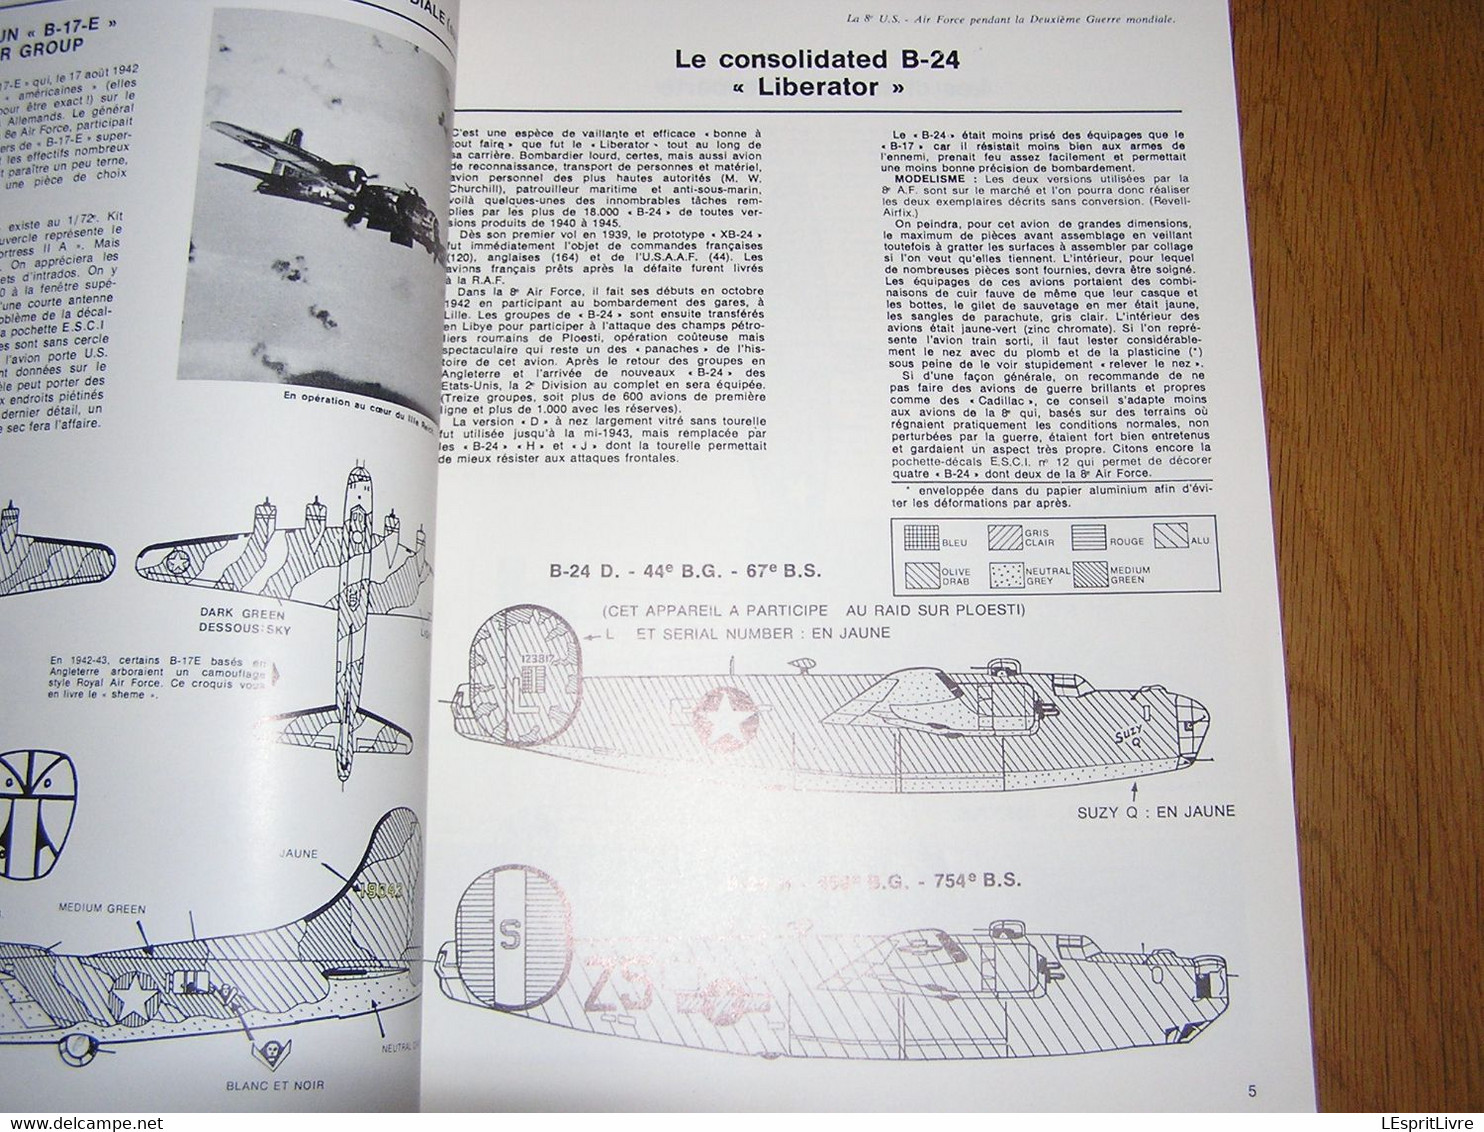 LES MORDUS DU MODELISME N° 3 Les 8 - 9 US AIR FORCE USAAF Guerre 40 45 Maquette Avion Camouflage Marque Marking Aviation - Model Making